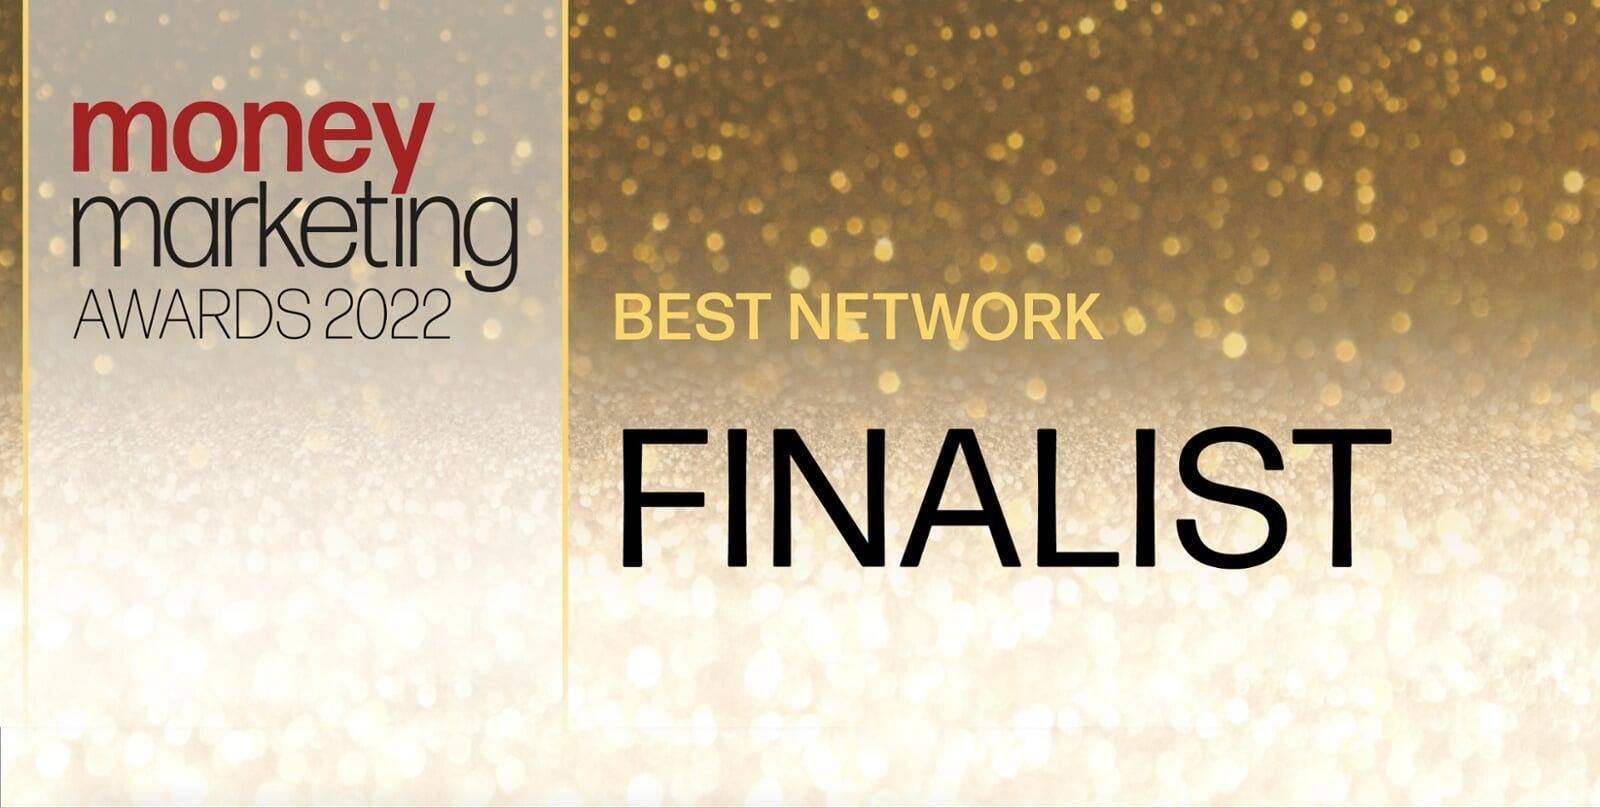 Tenet Shortlisted for Best Network at Money Marketing Awards